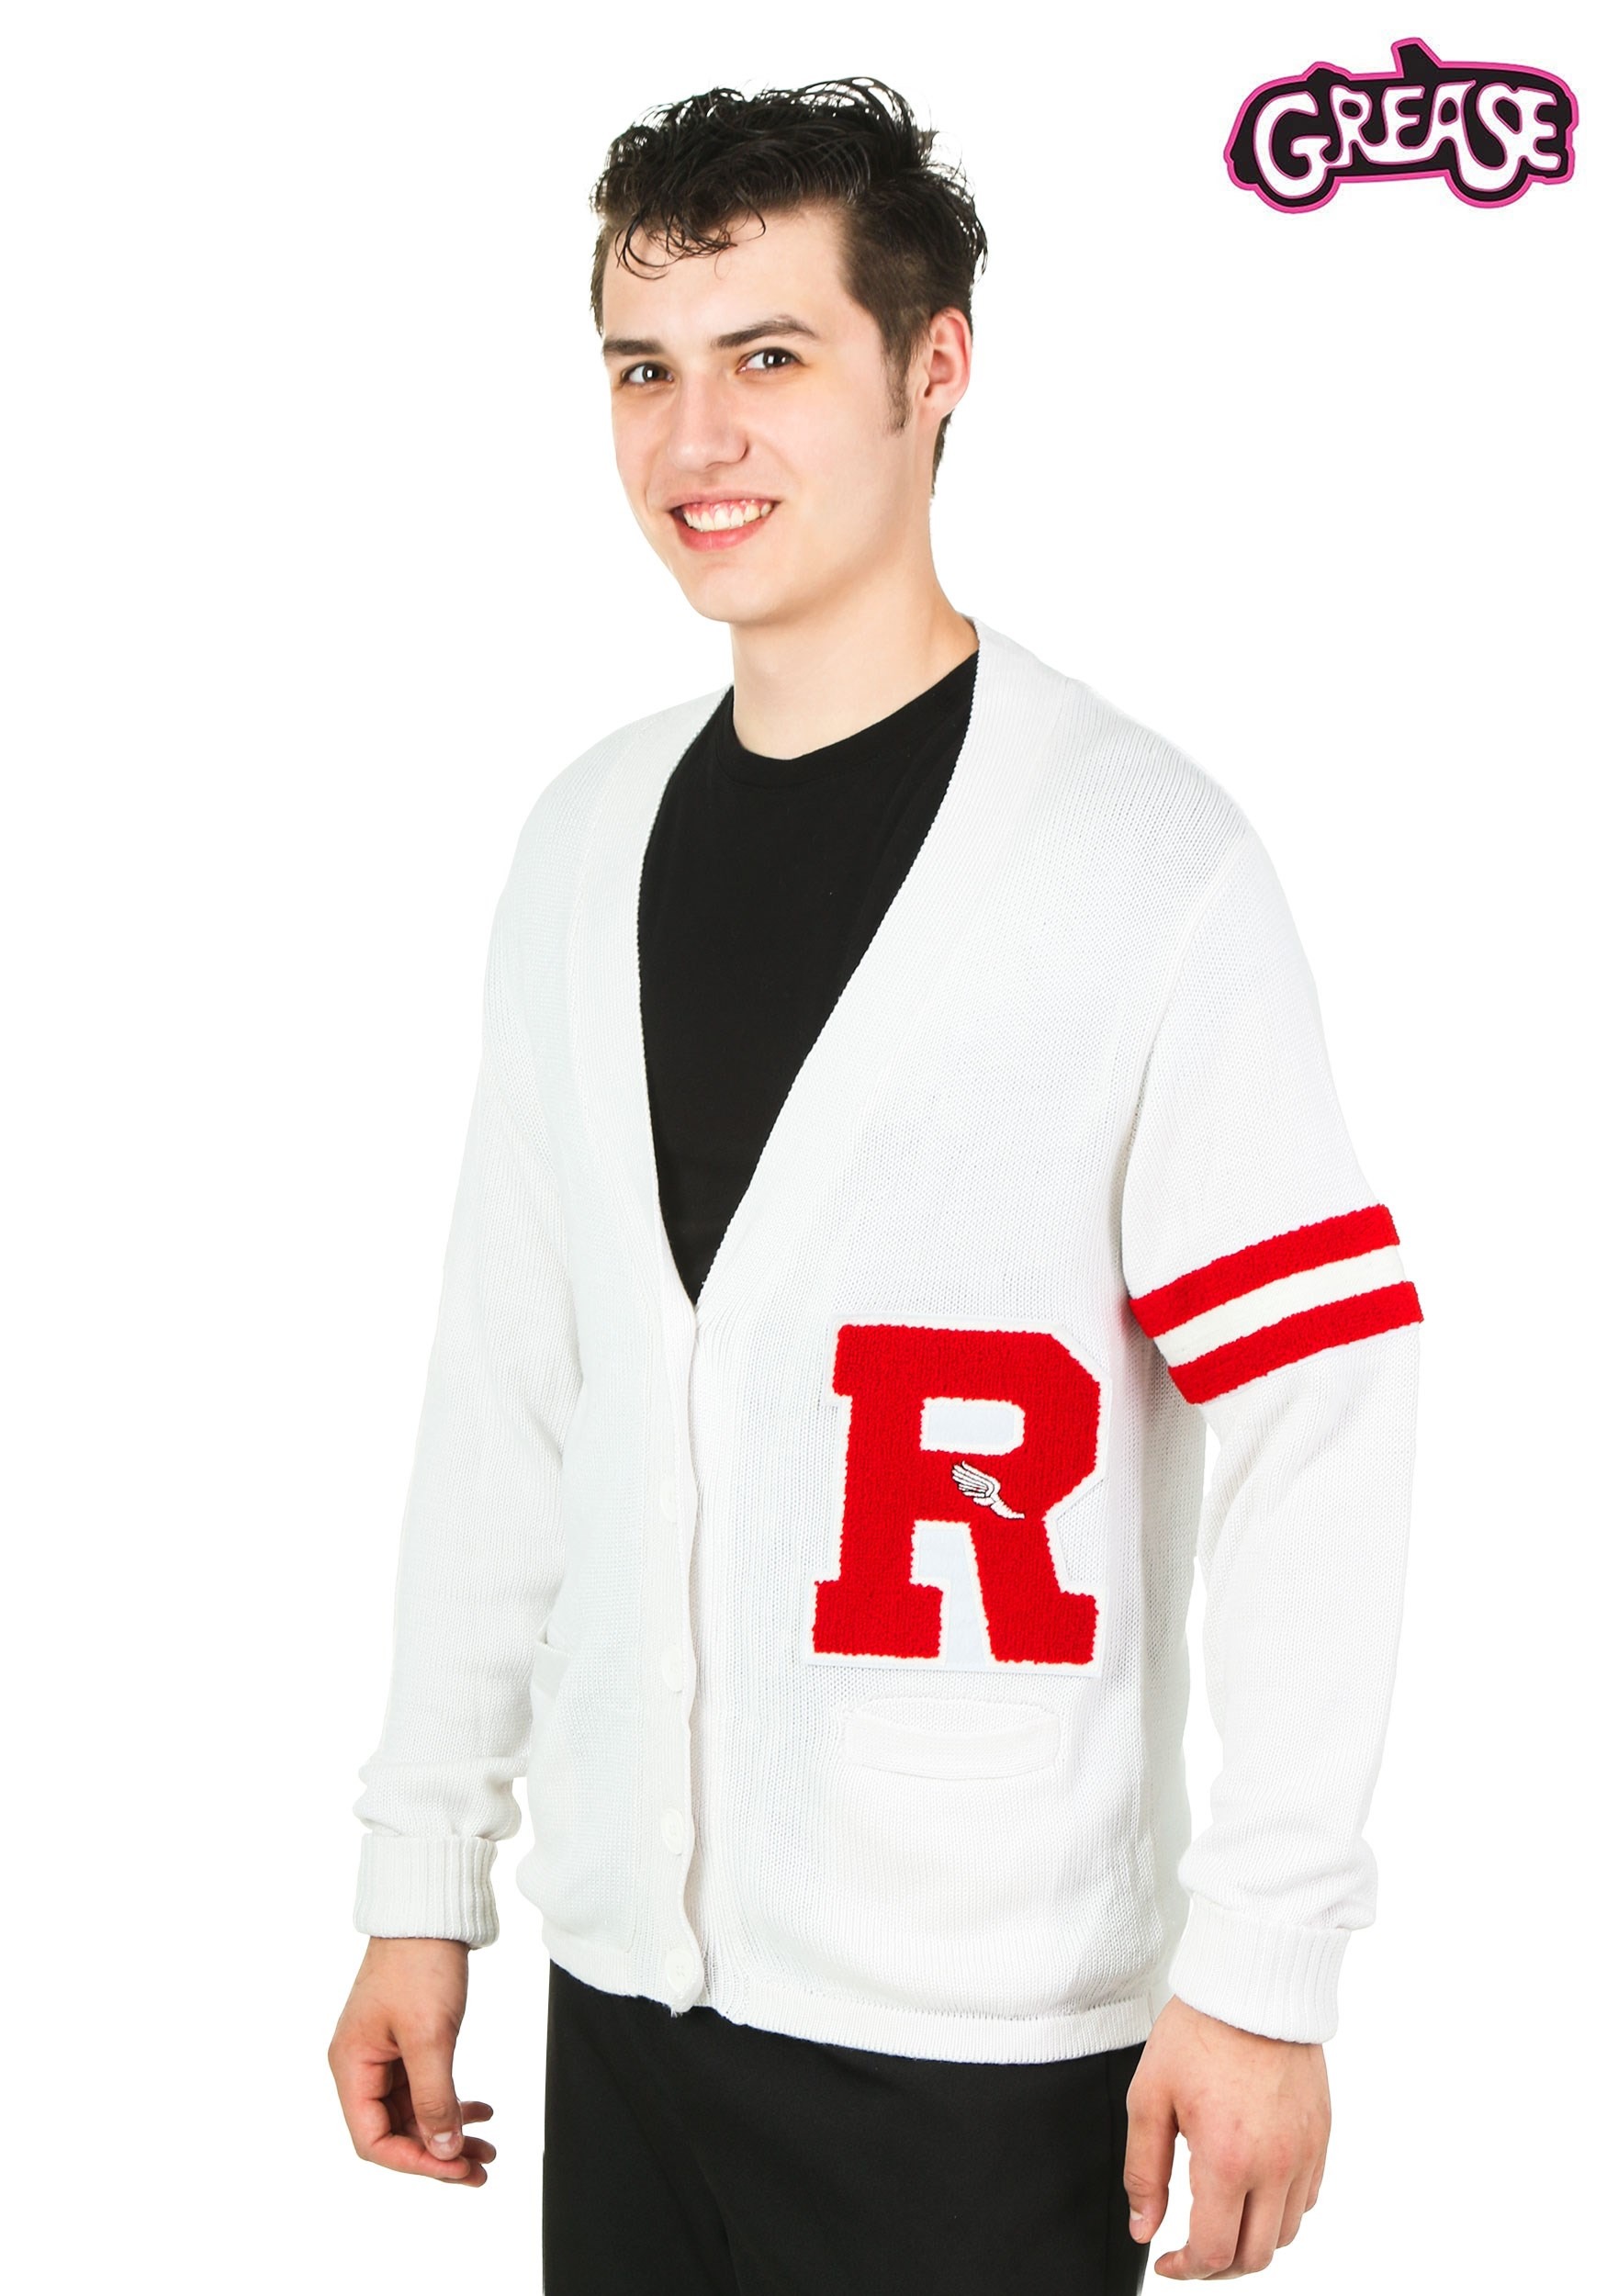 Grease Rydell High Men’s Letter Sweater Costume